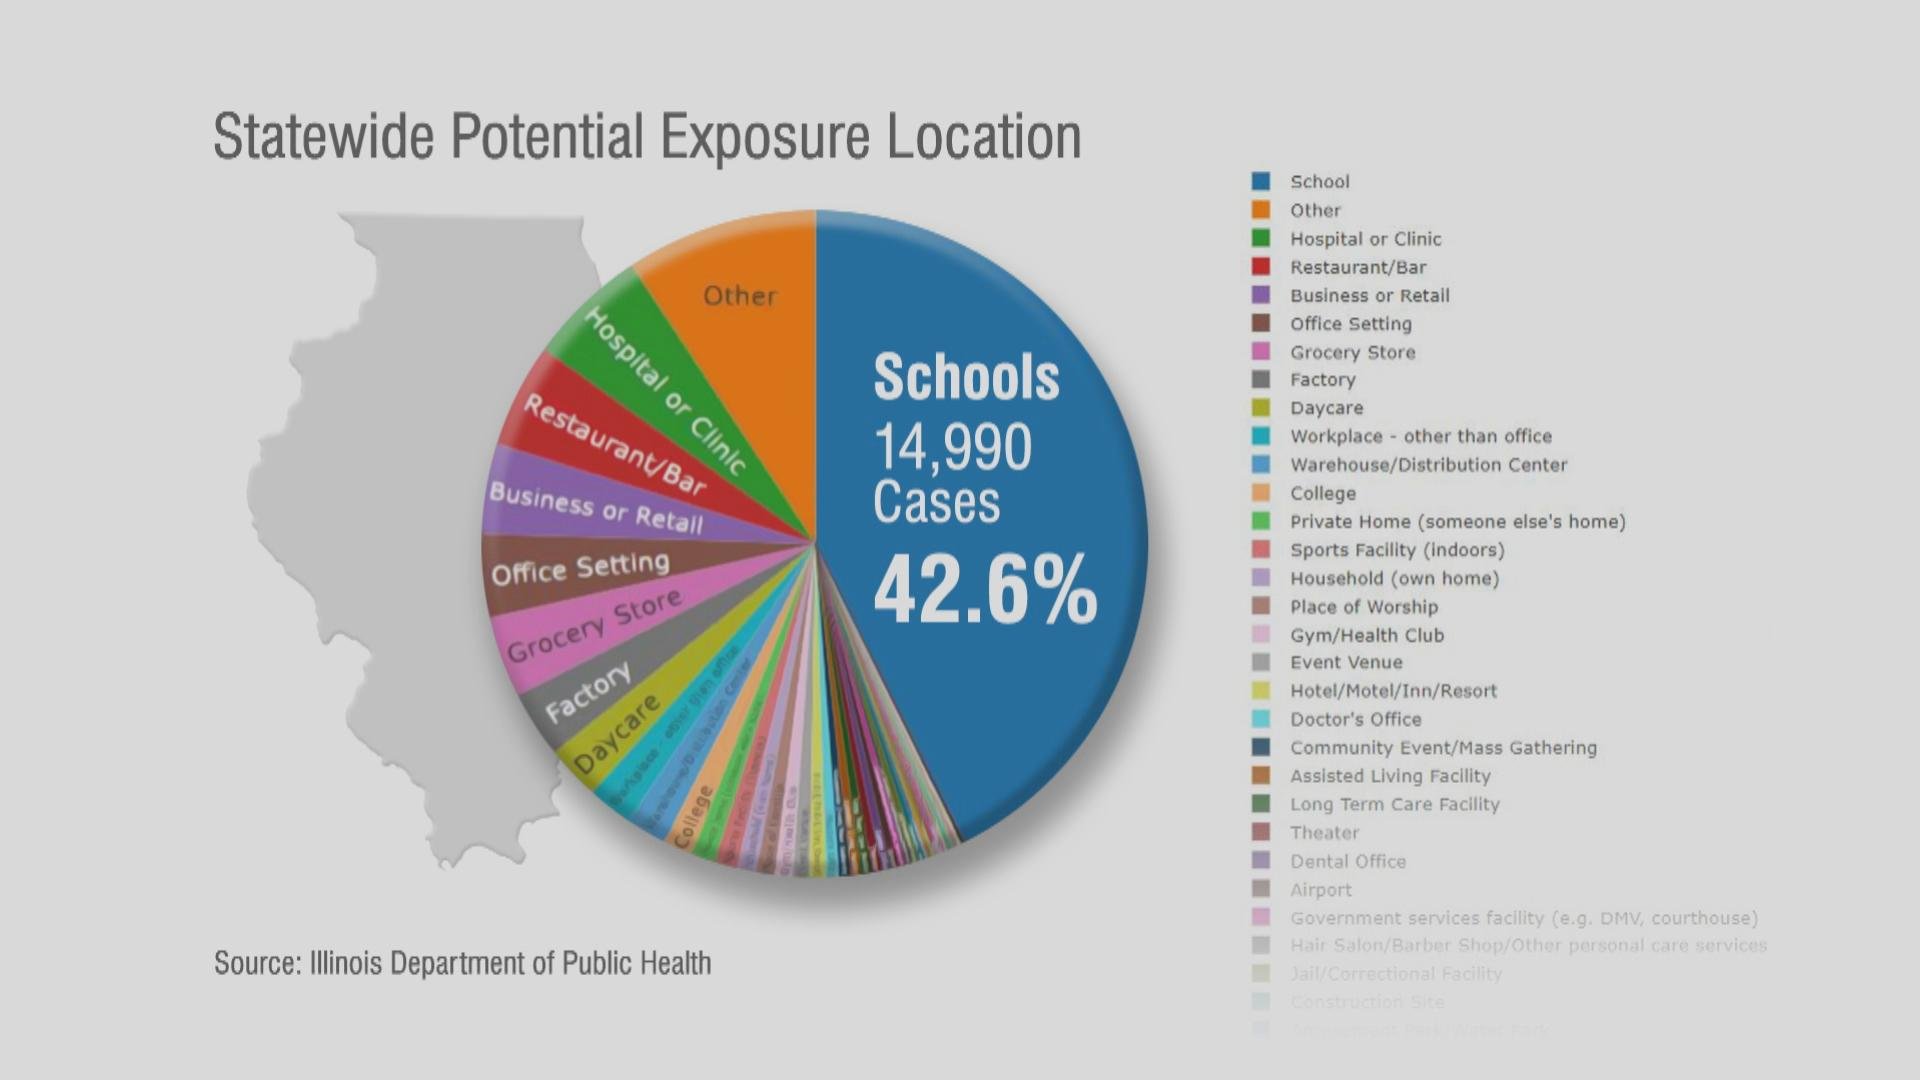 Source: Illinois Department of Public Health